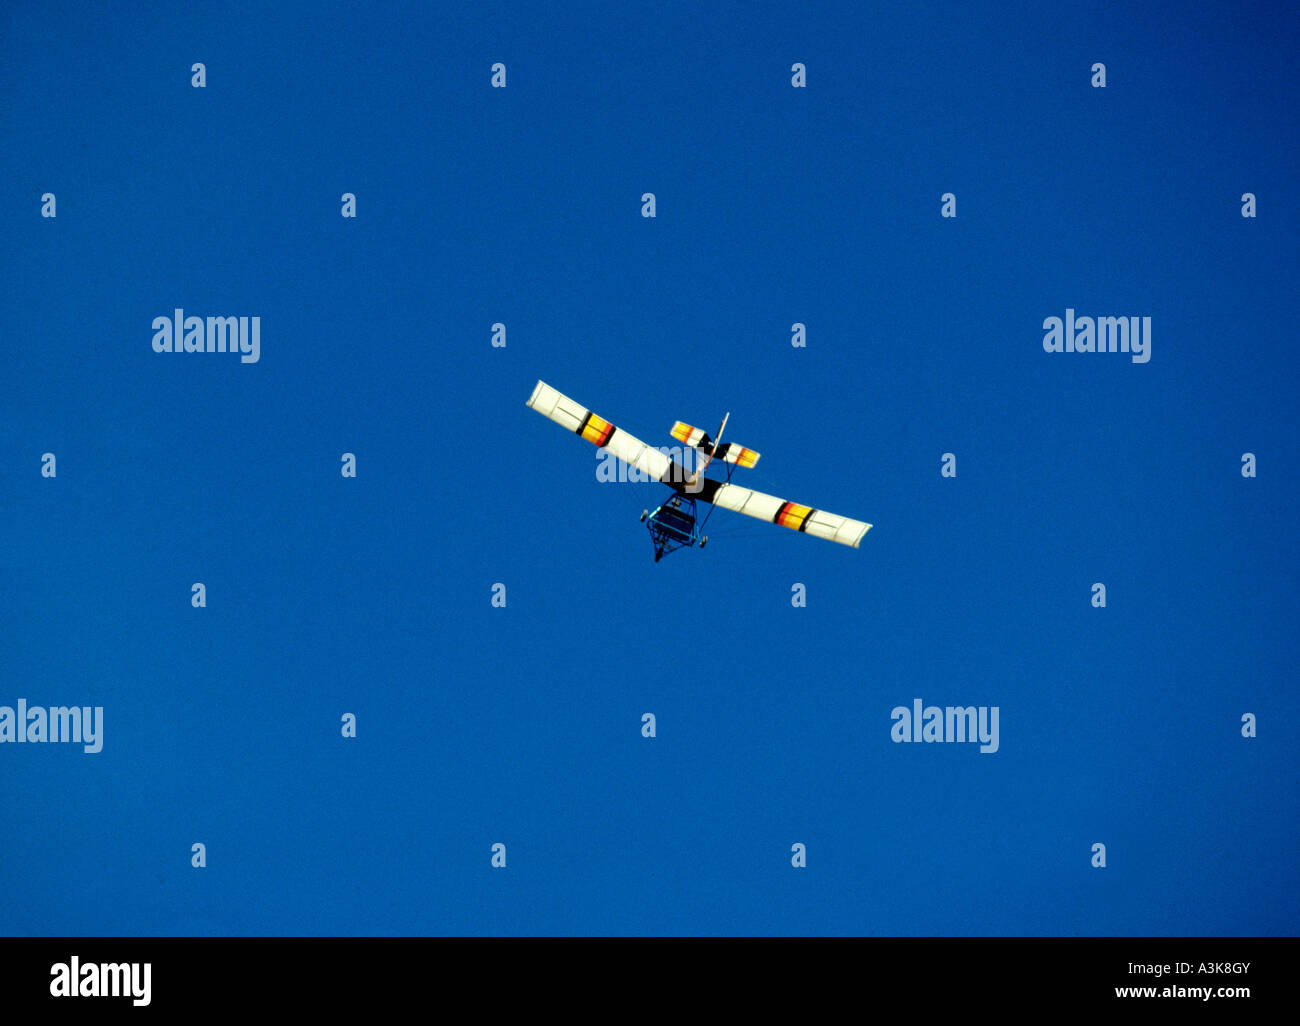 Microlite lightweight single engine aircraft against a blue sky Stock Photo